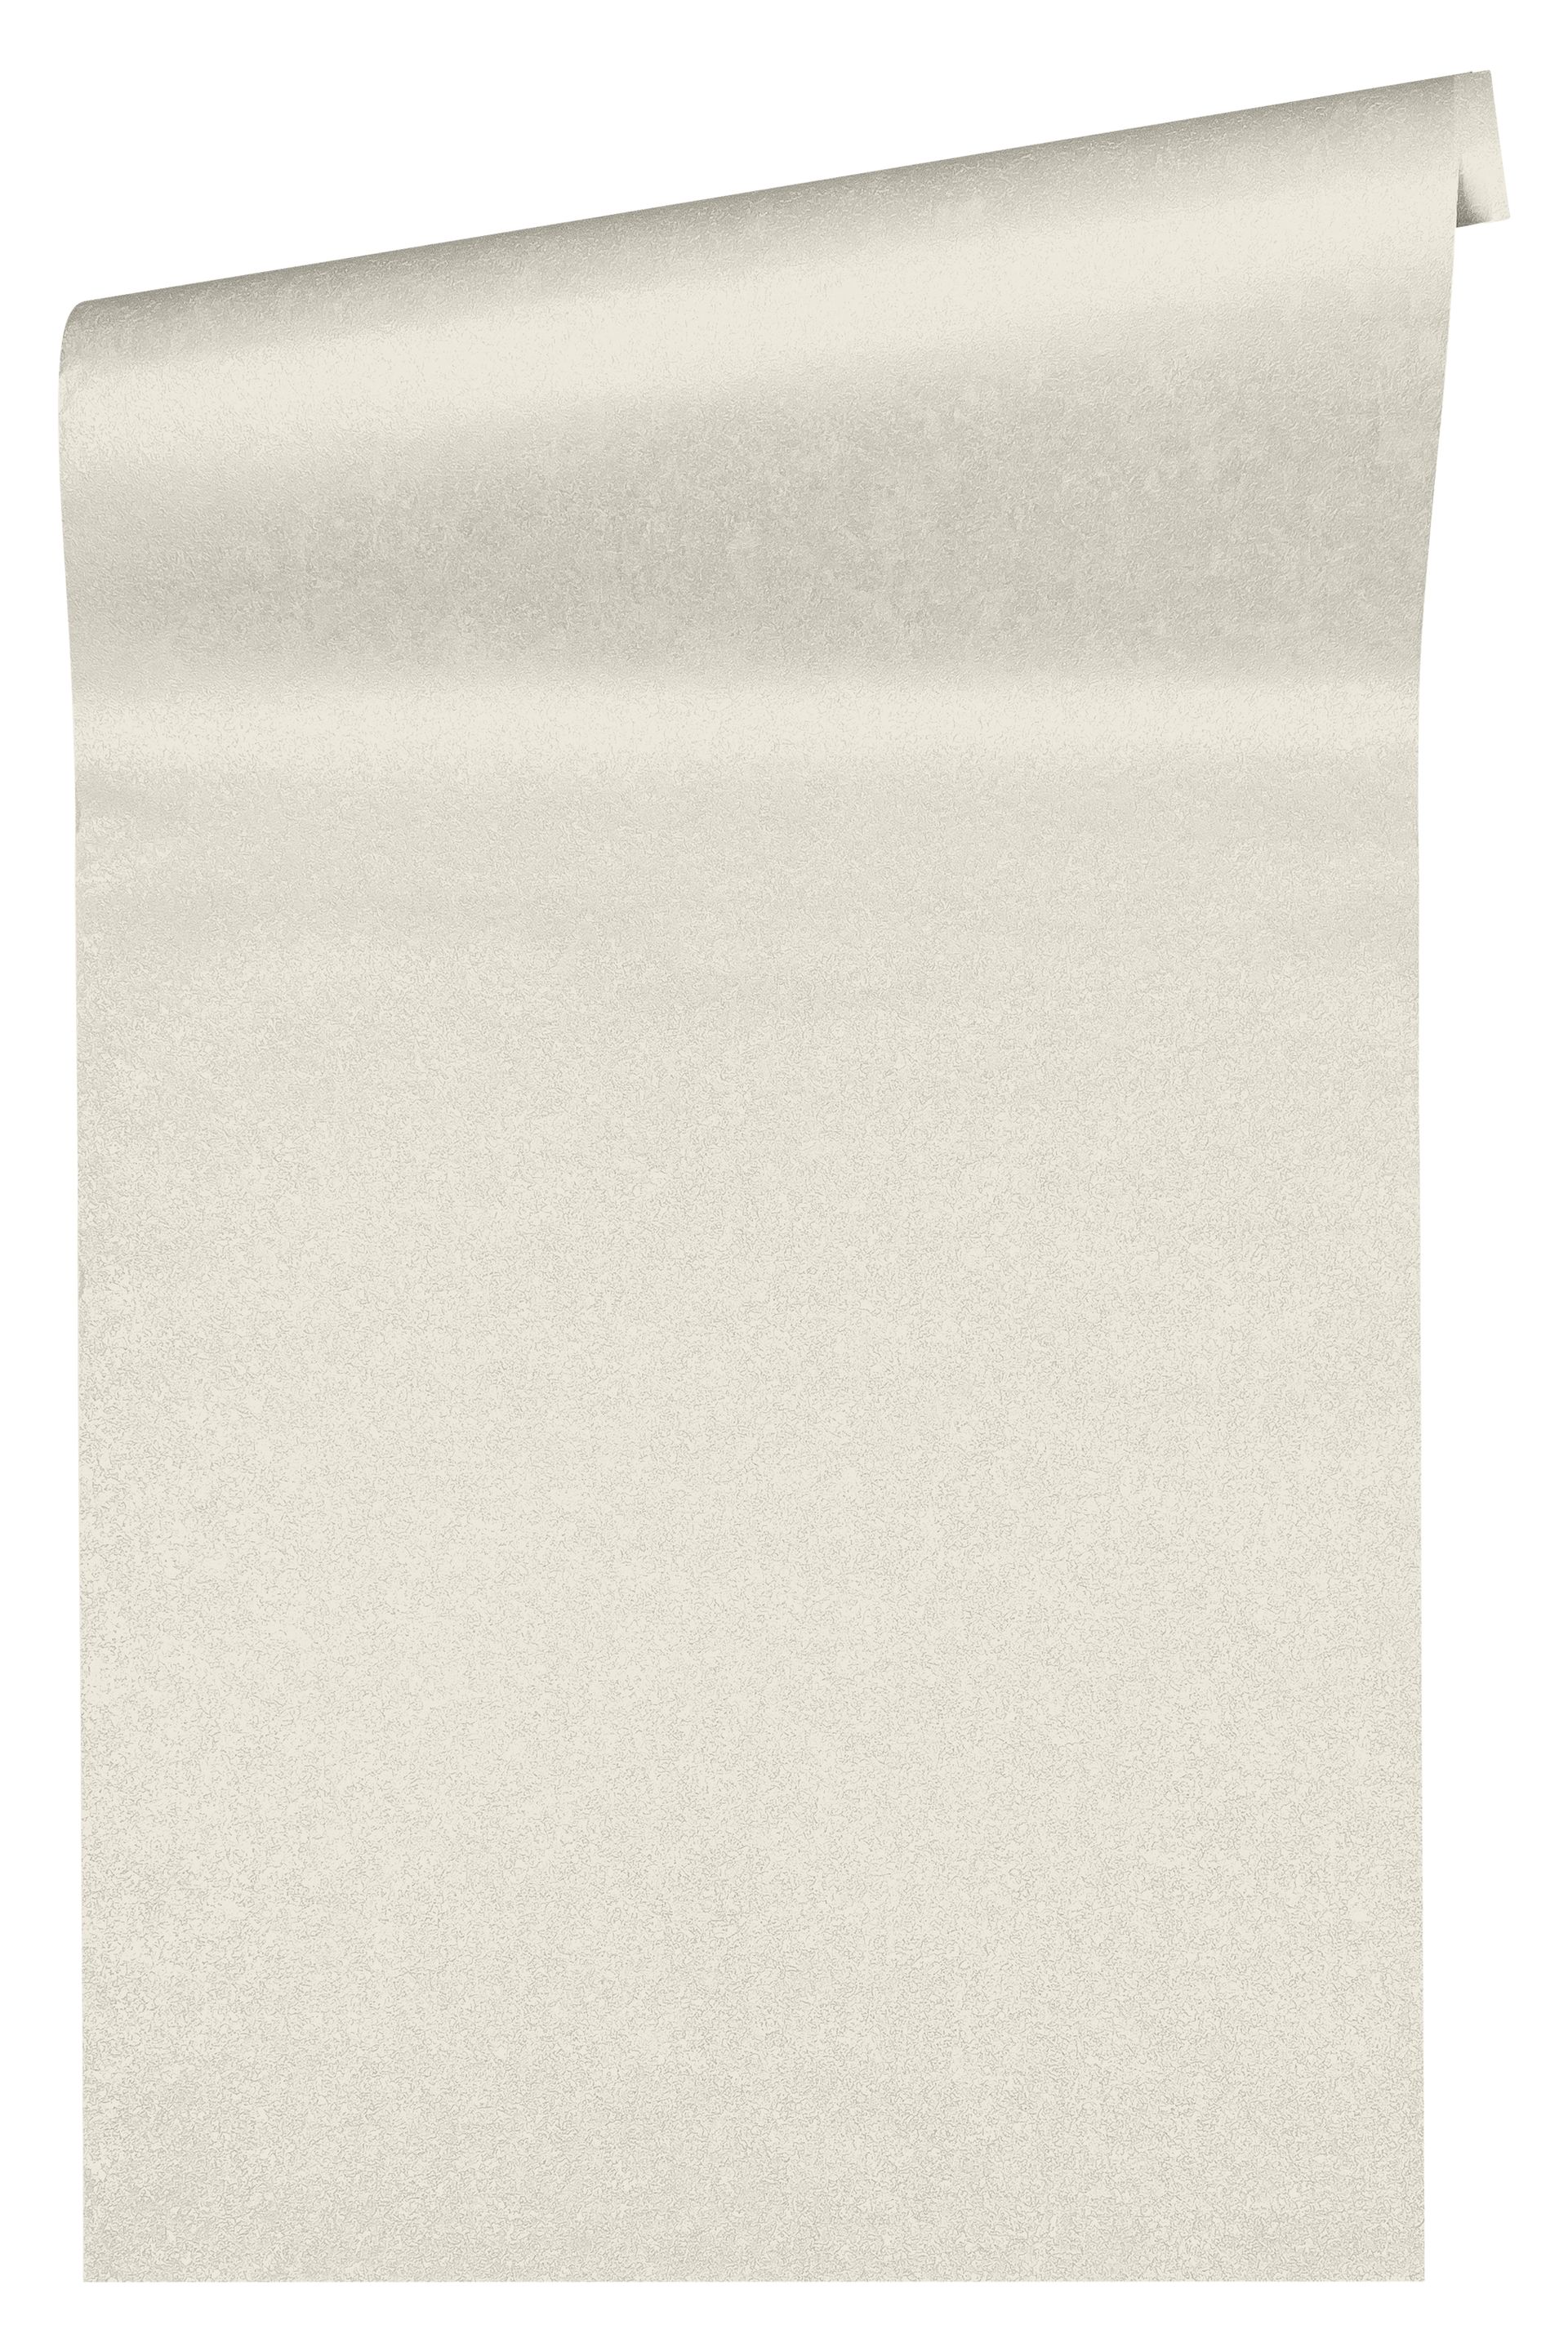 Versace wallpaper Versace 3, Design Tapete, weiß 935822